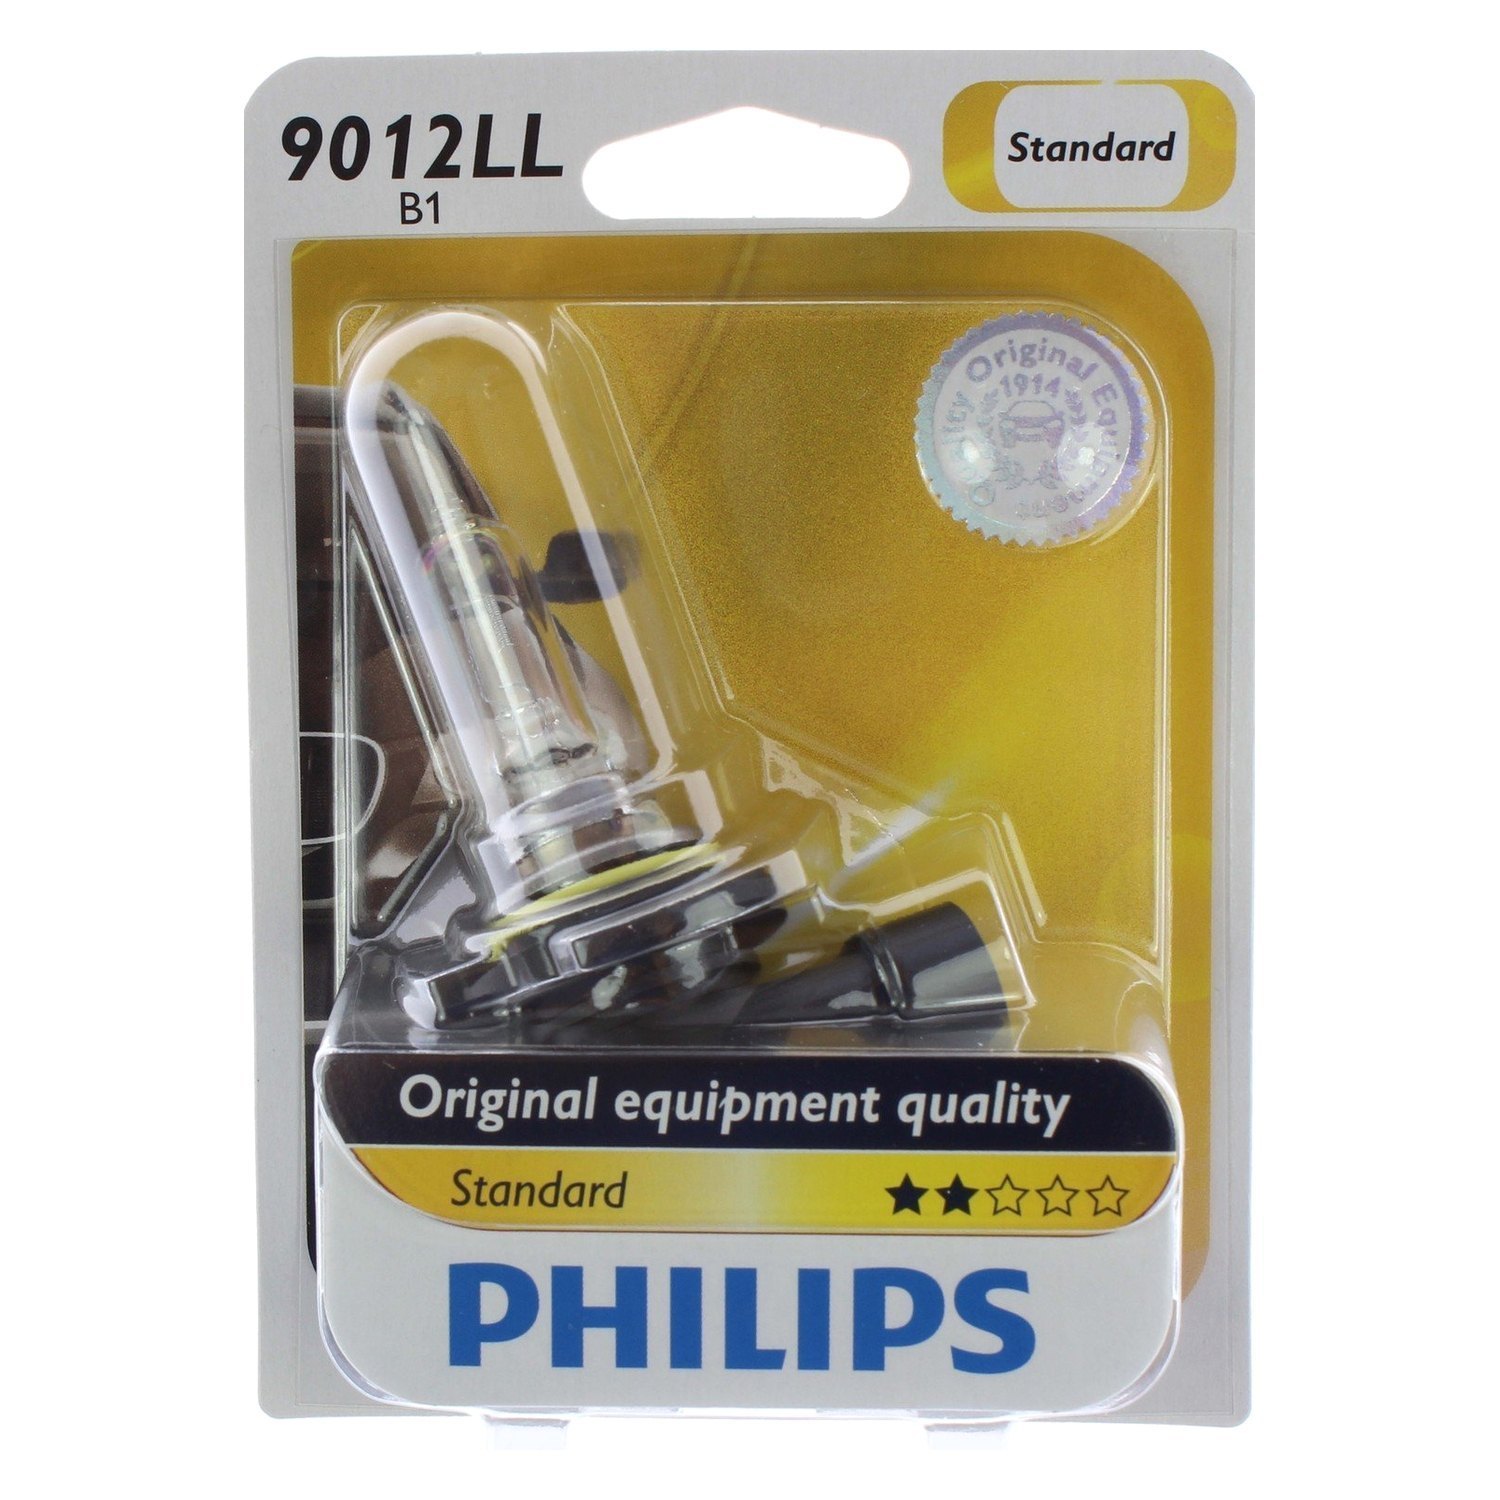 9012llc1 Philips. Автолампа Philips p-9012ll. Лампы Филипс Лонг Лайт 24 вольта. Фара Philips.